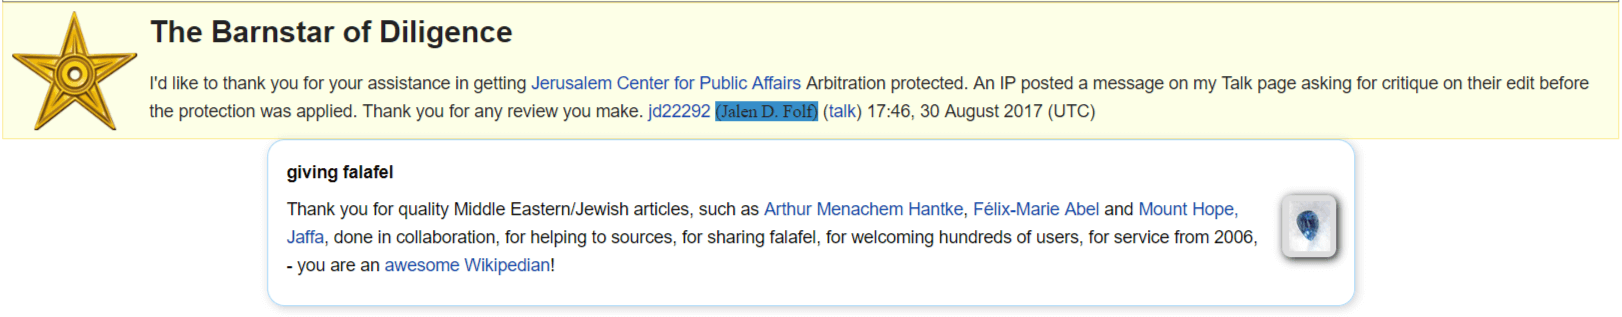 Shrike Israel Википедия MintPress Новости